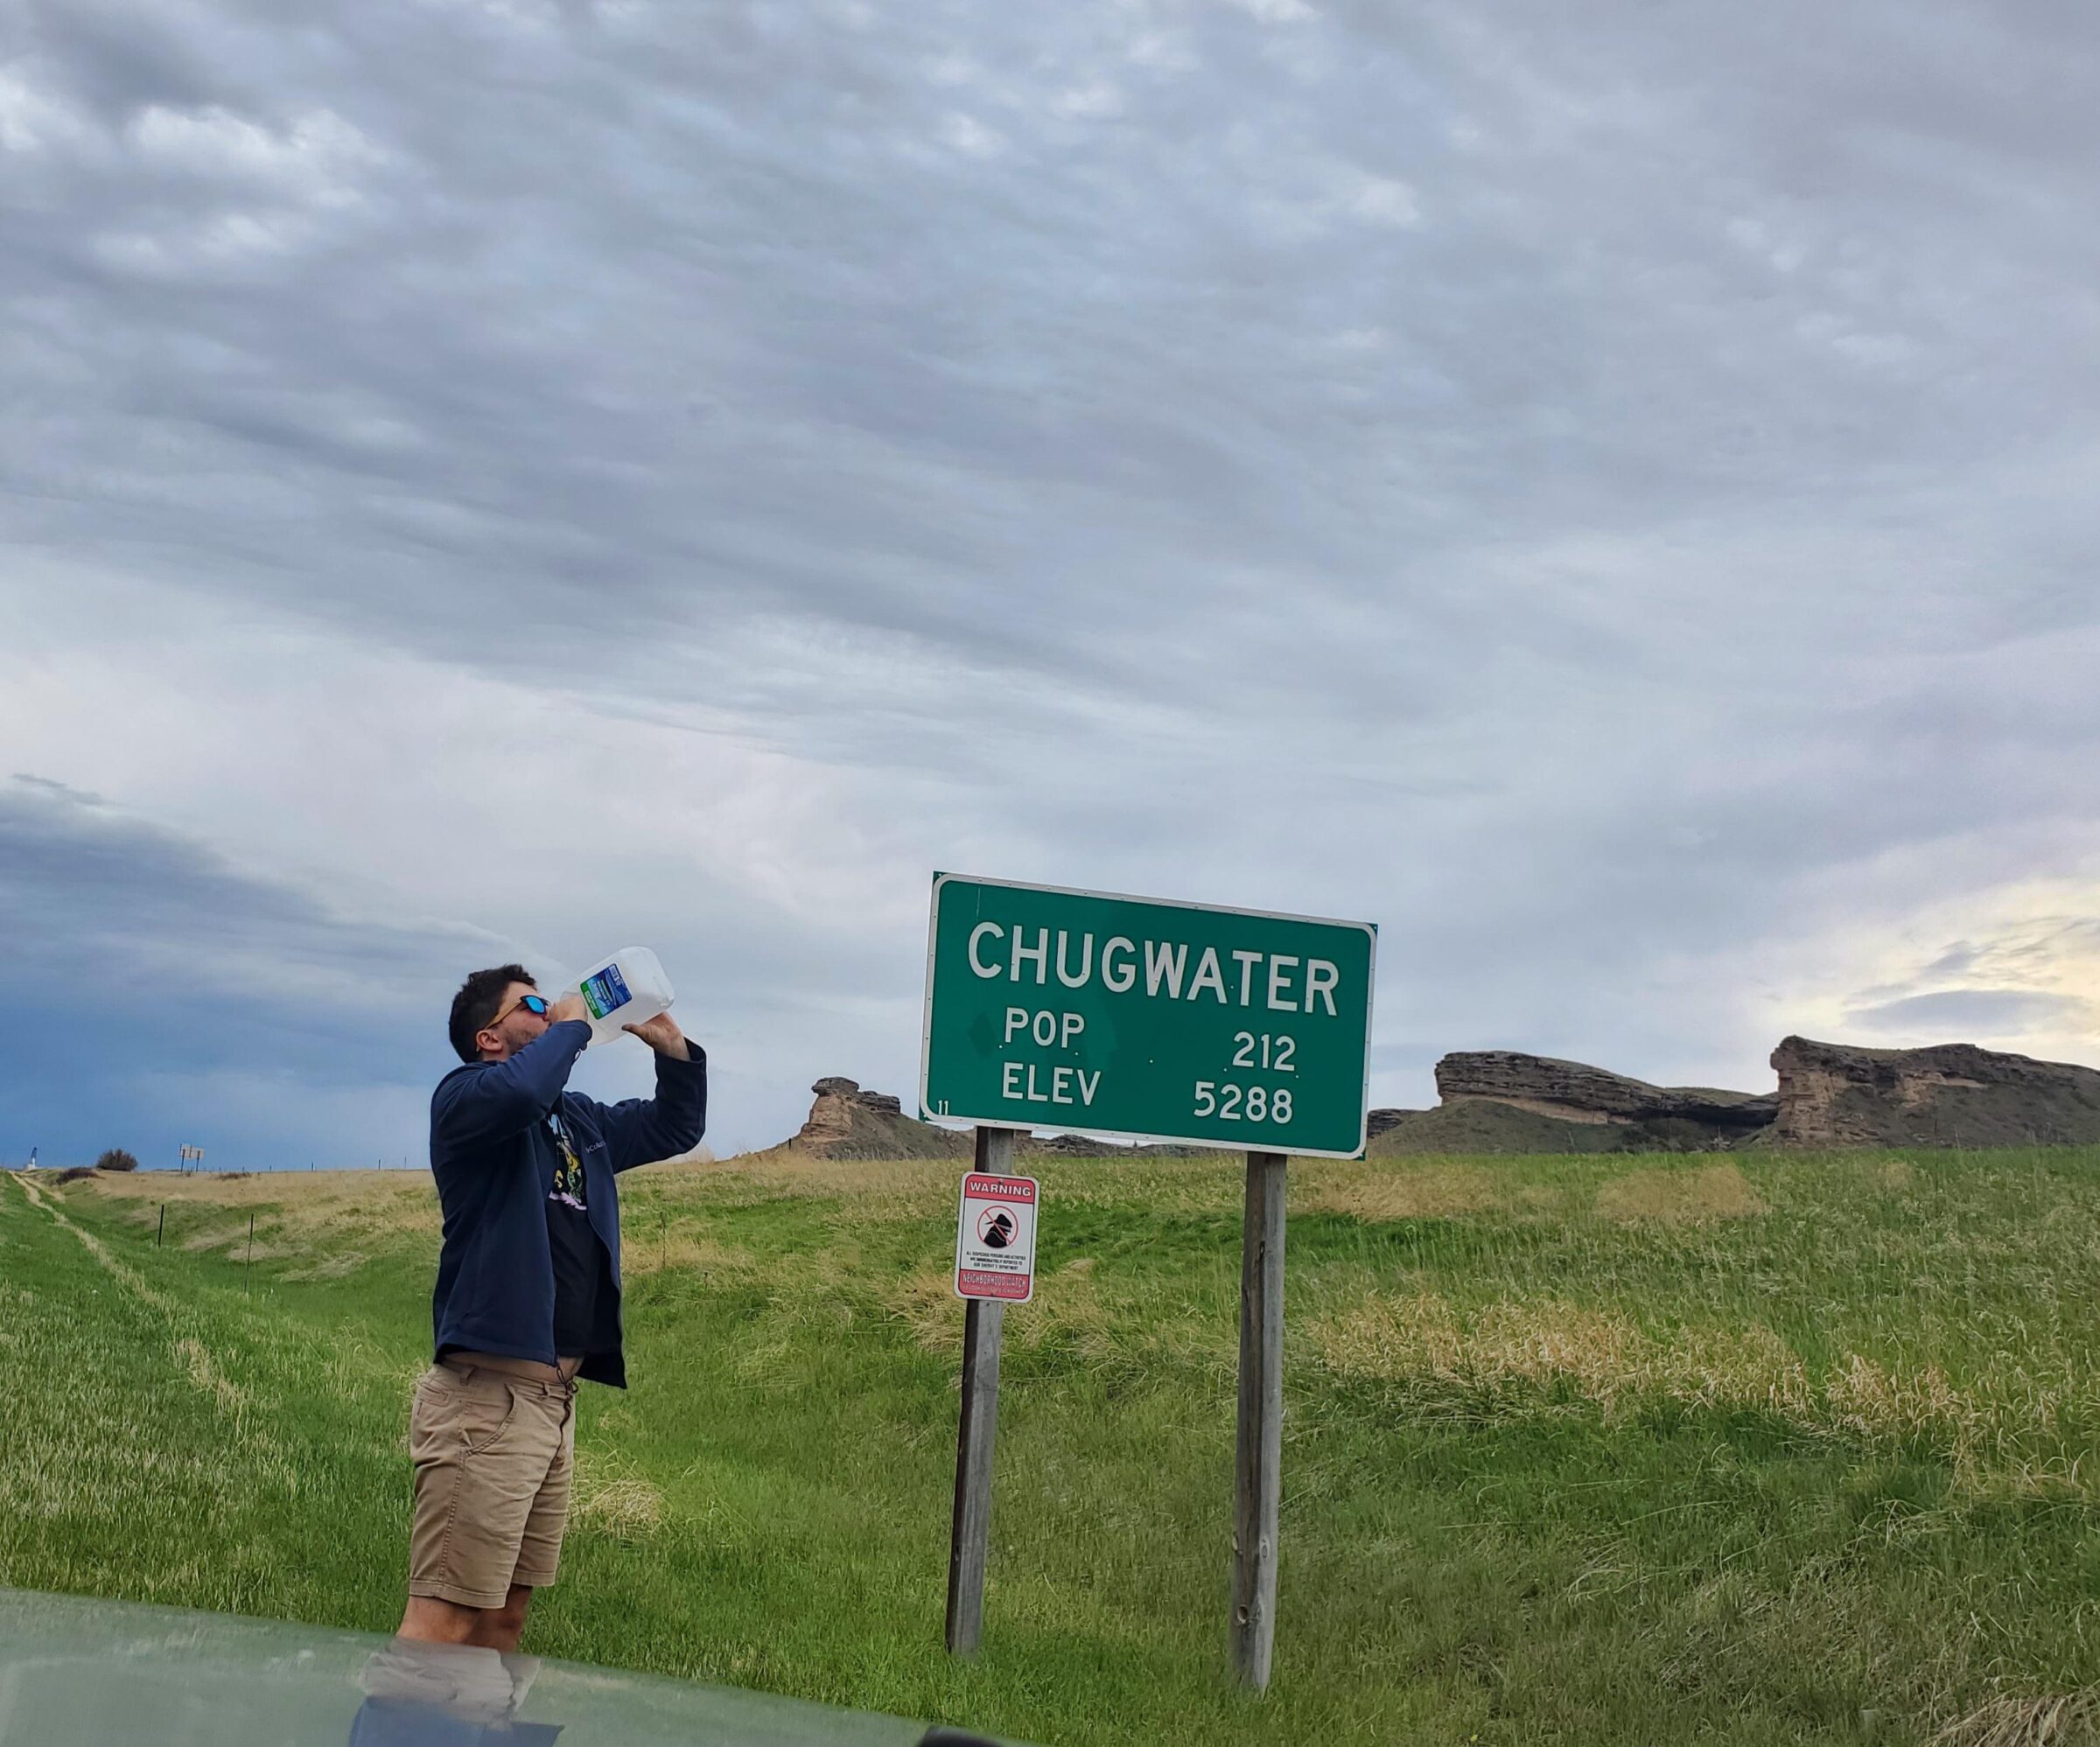 Water, Chugwater, Wheatland, Drinkwater, Cheyenne, Homies Water Memes Water, Chugwater, Wheatland, Drinkwater, Cheyenne, Homies text: CHUGWATER pop ELEV WARNING 212 5288 